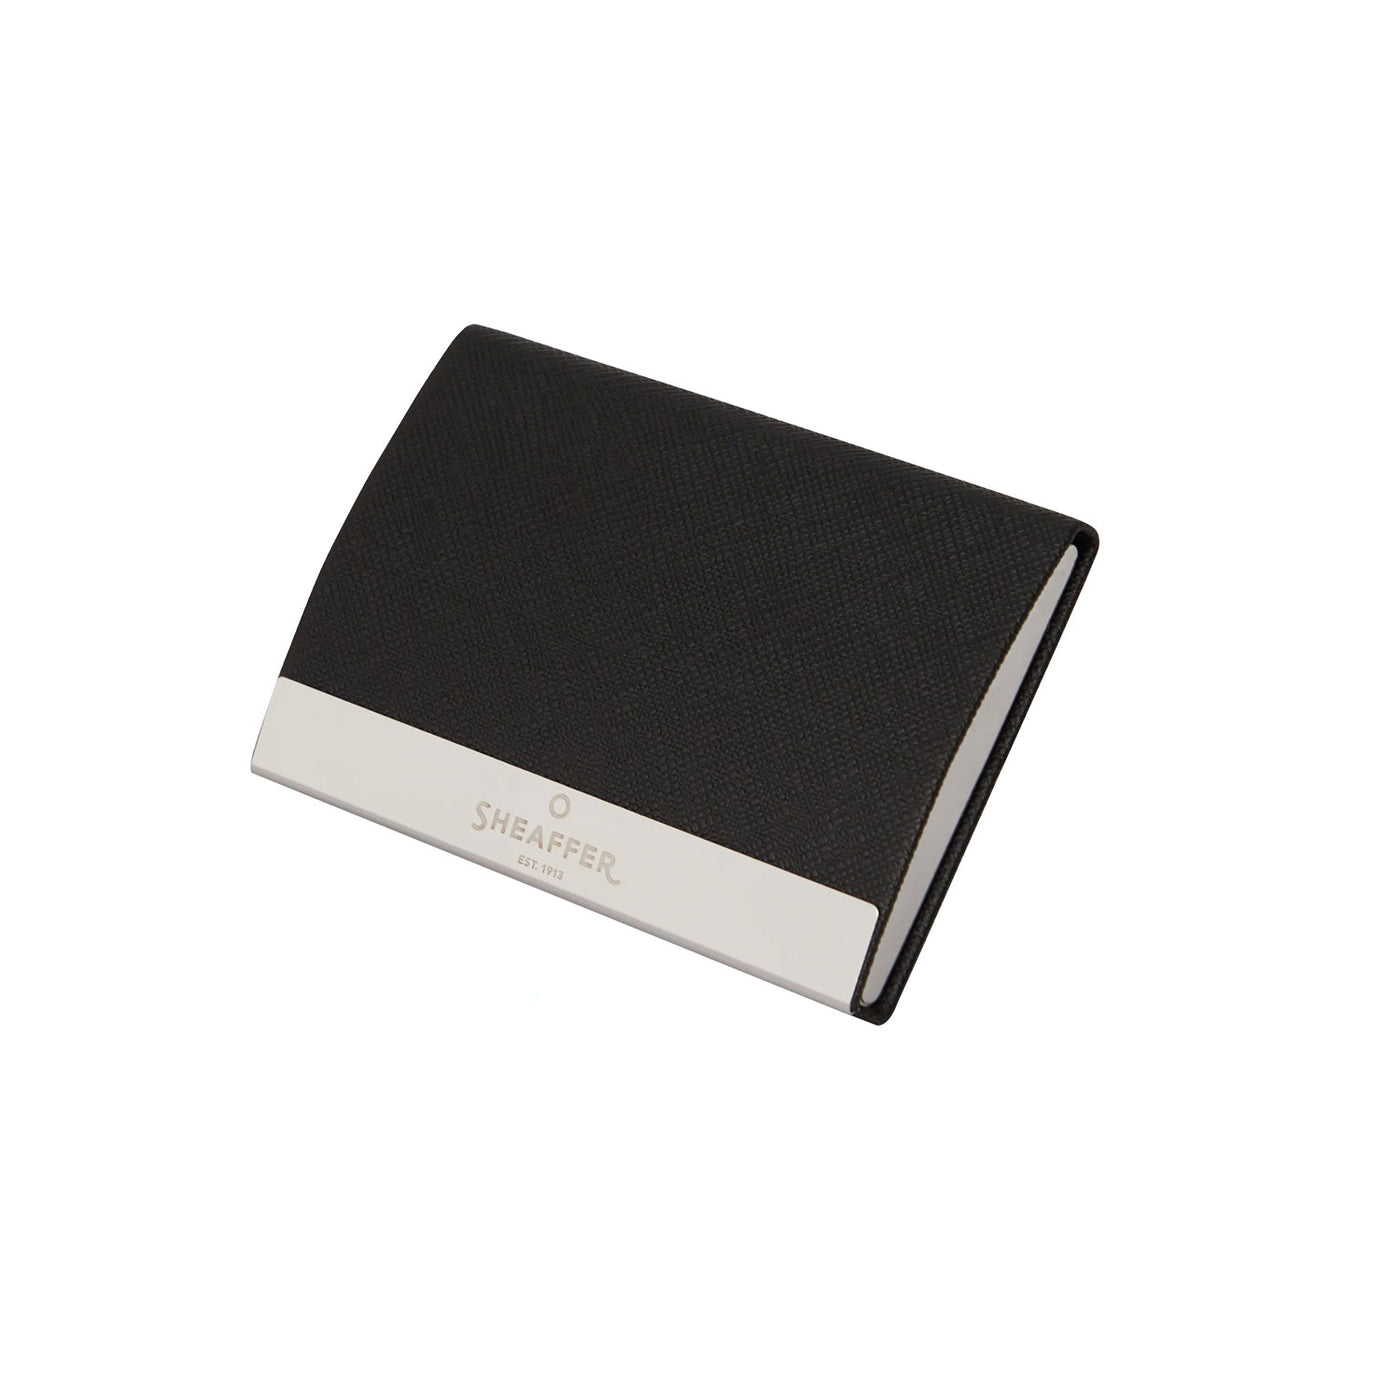 Sheaffer Gift Set - 100 Series Glossy Black & Chrome CT Ball Pen with Business Card Holder 5